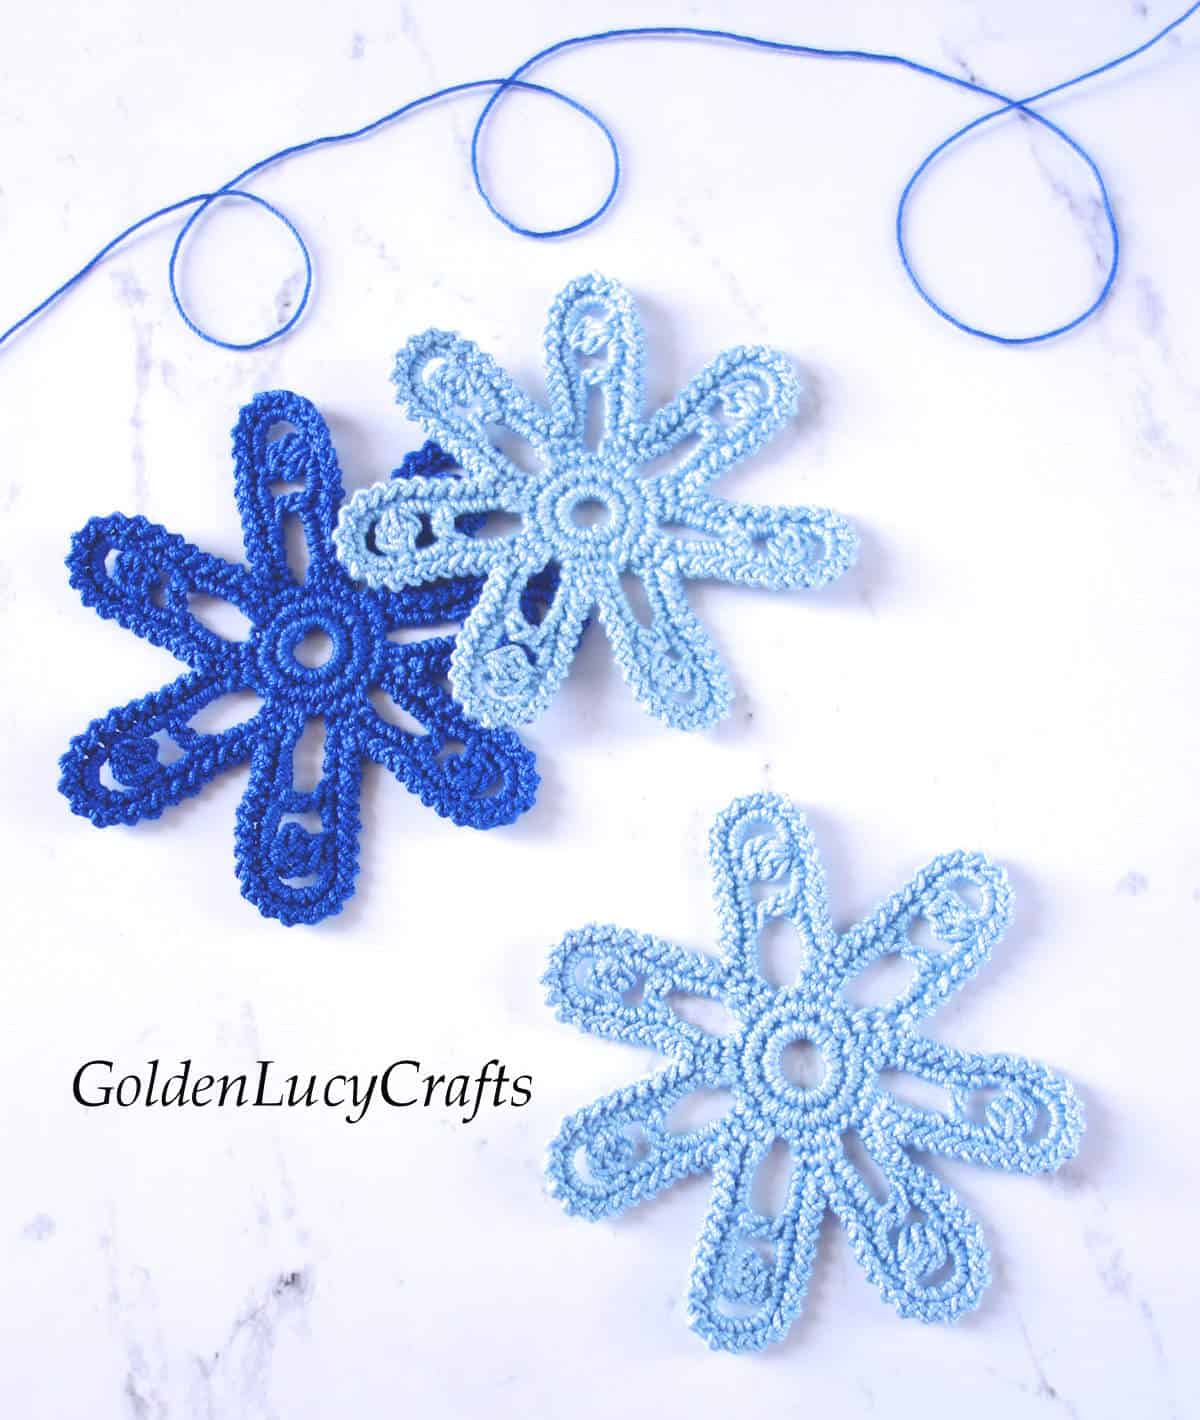 Three crocheted Irish flower motifs in blue colors.